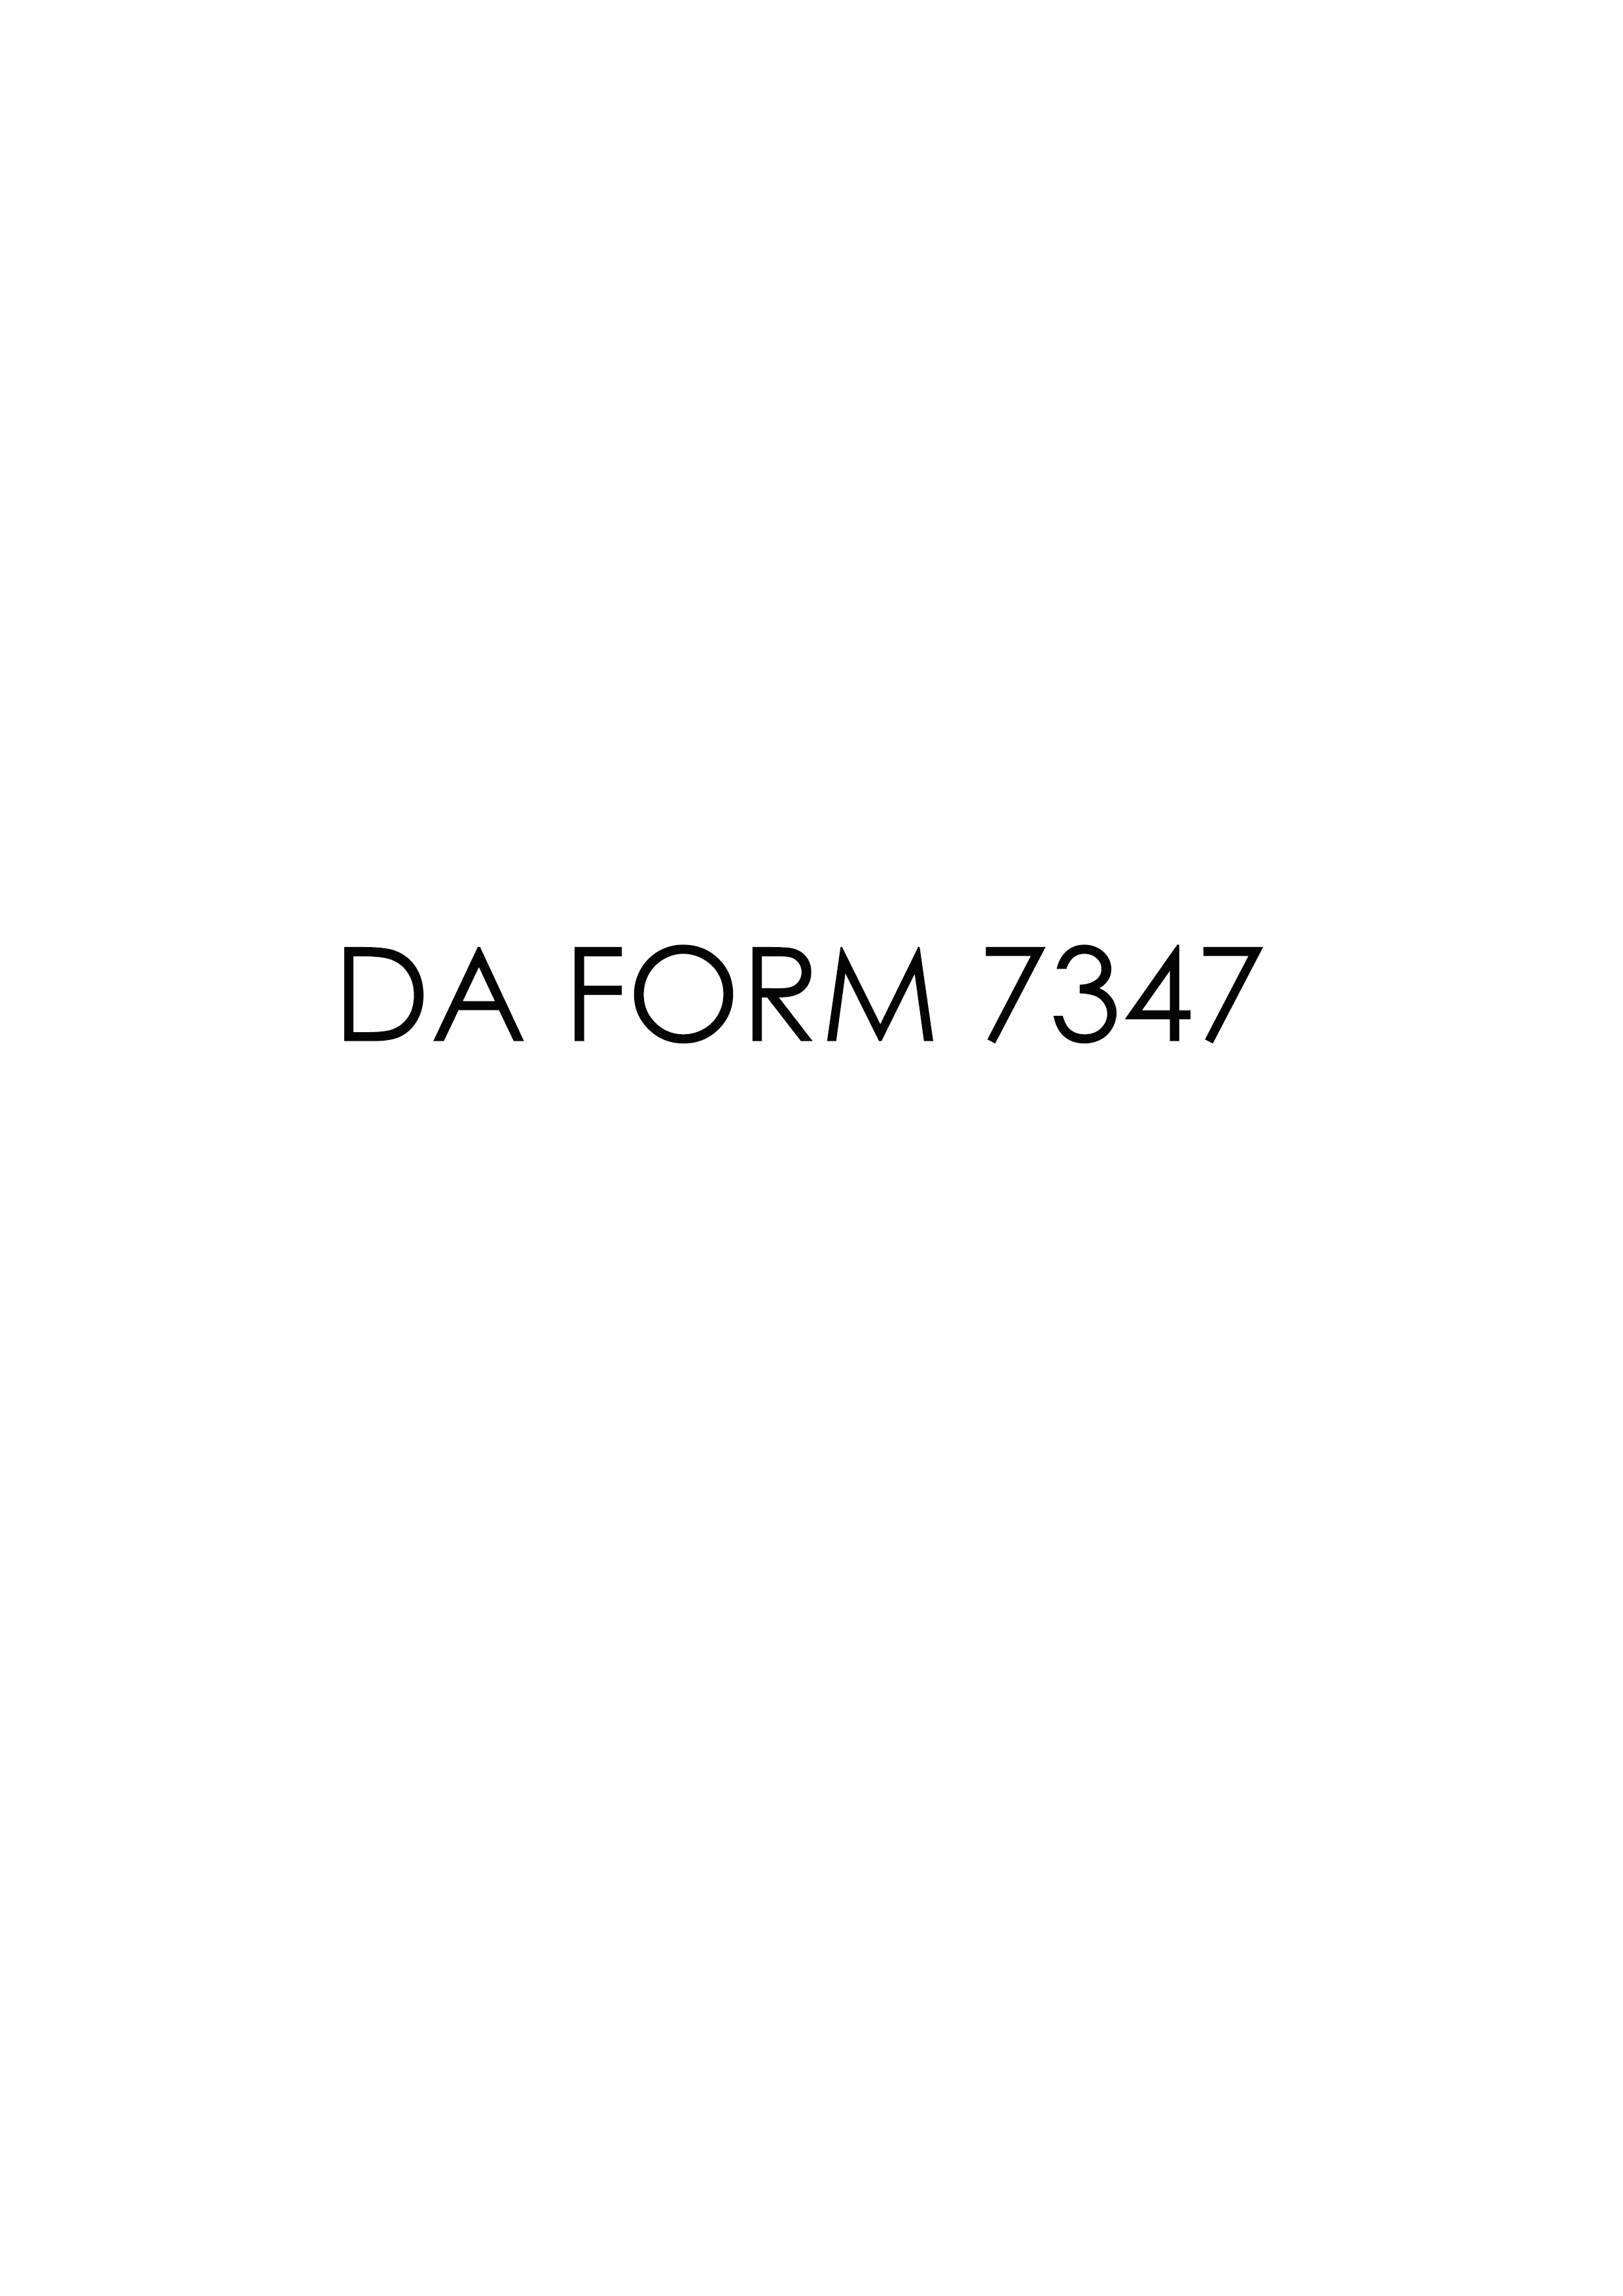 da Form 7347 fillable